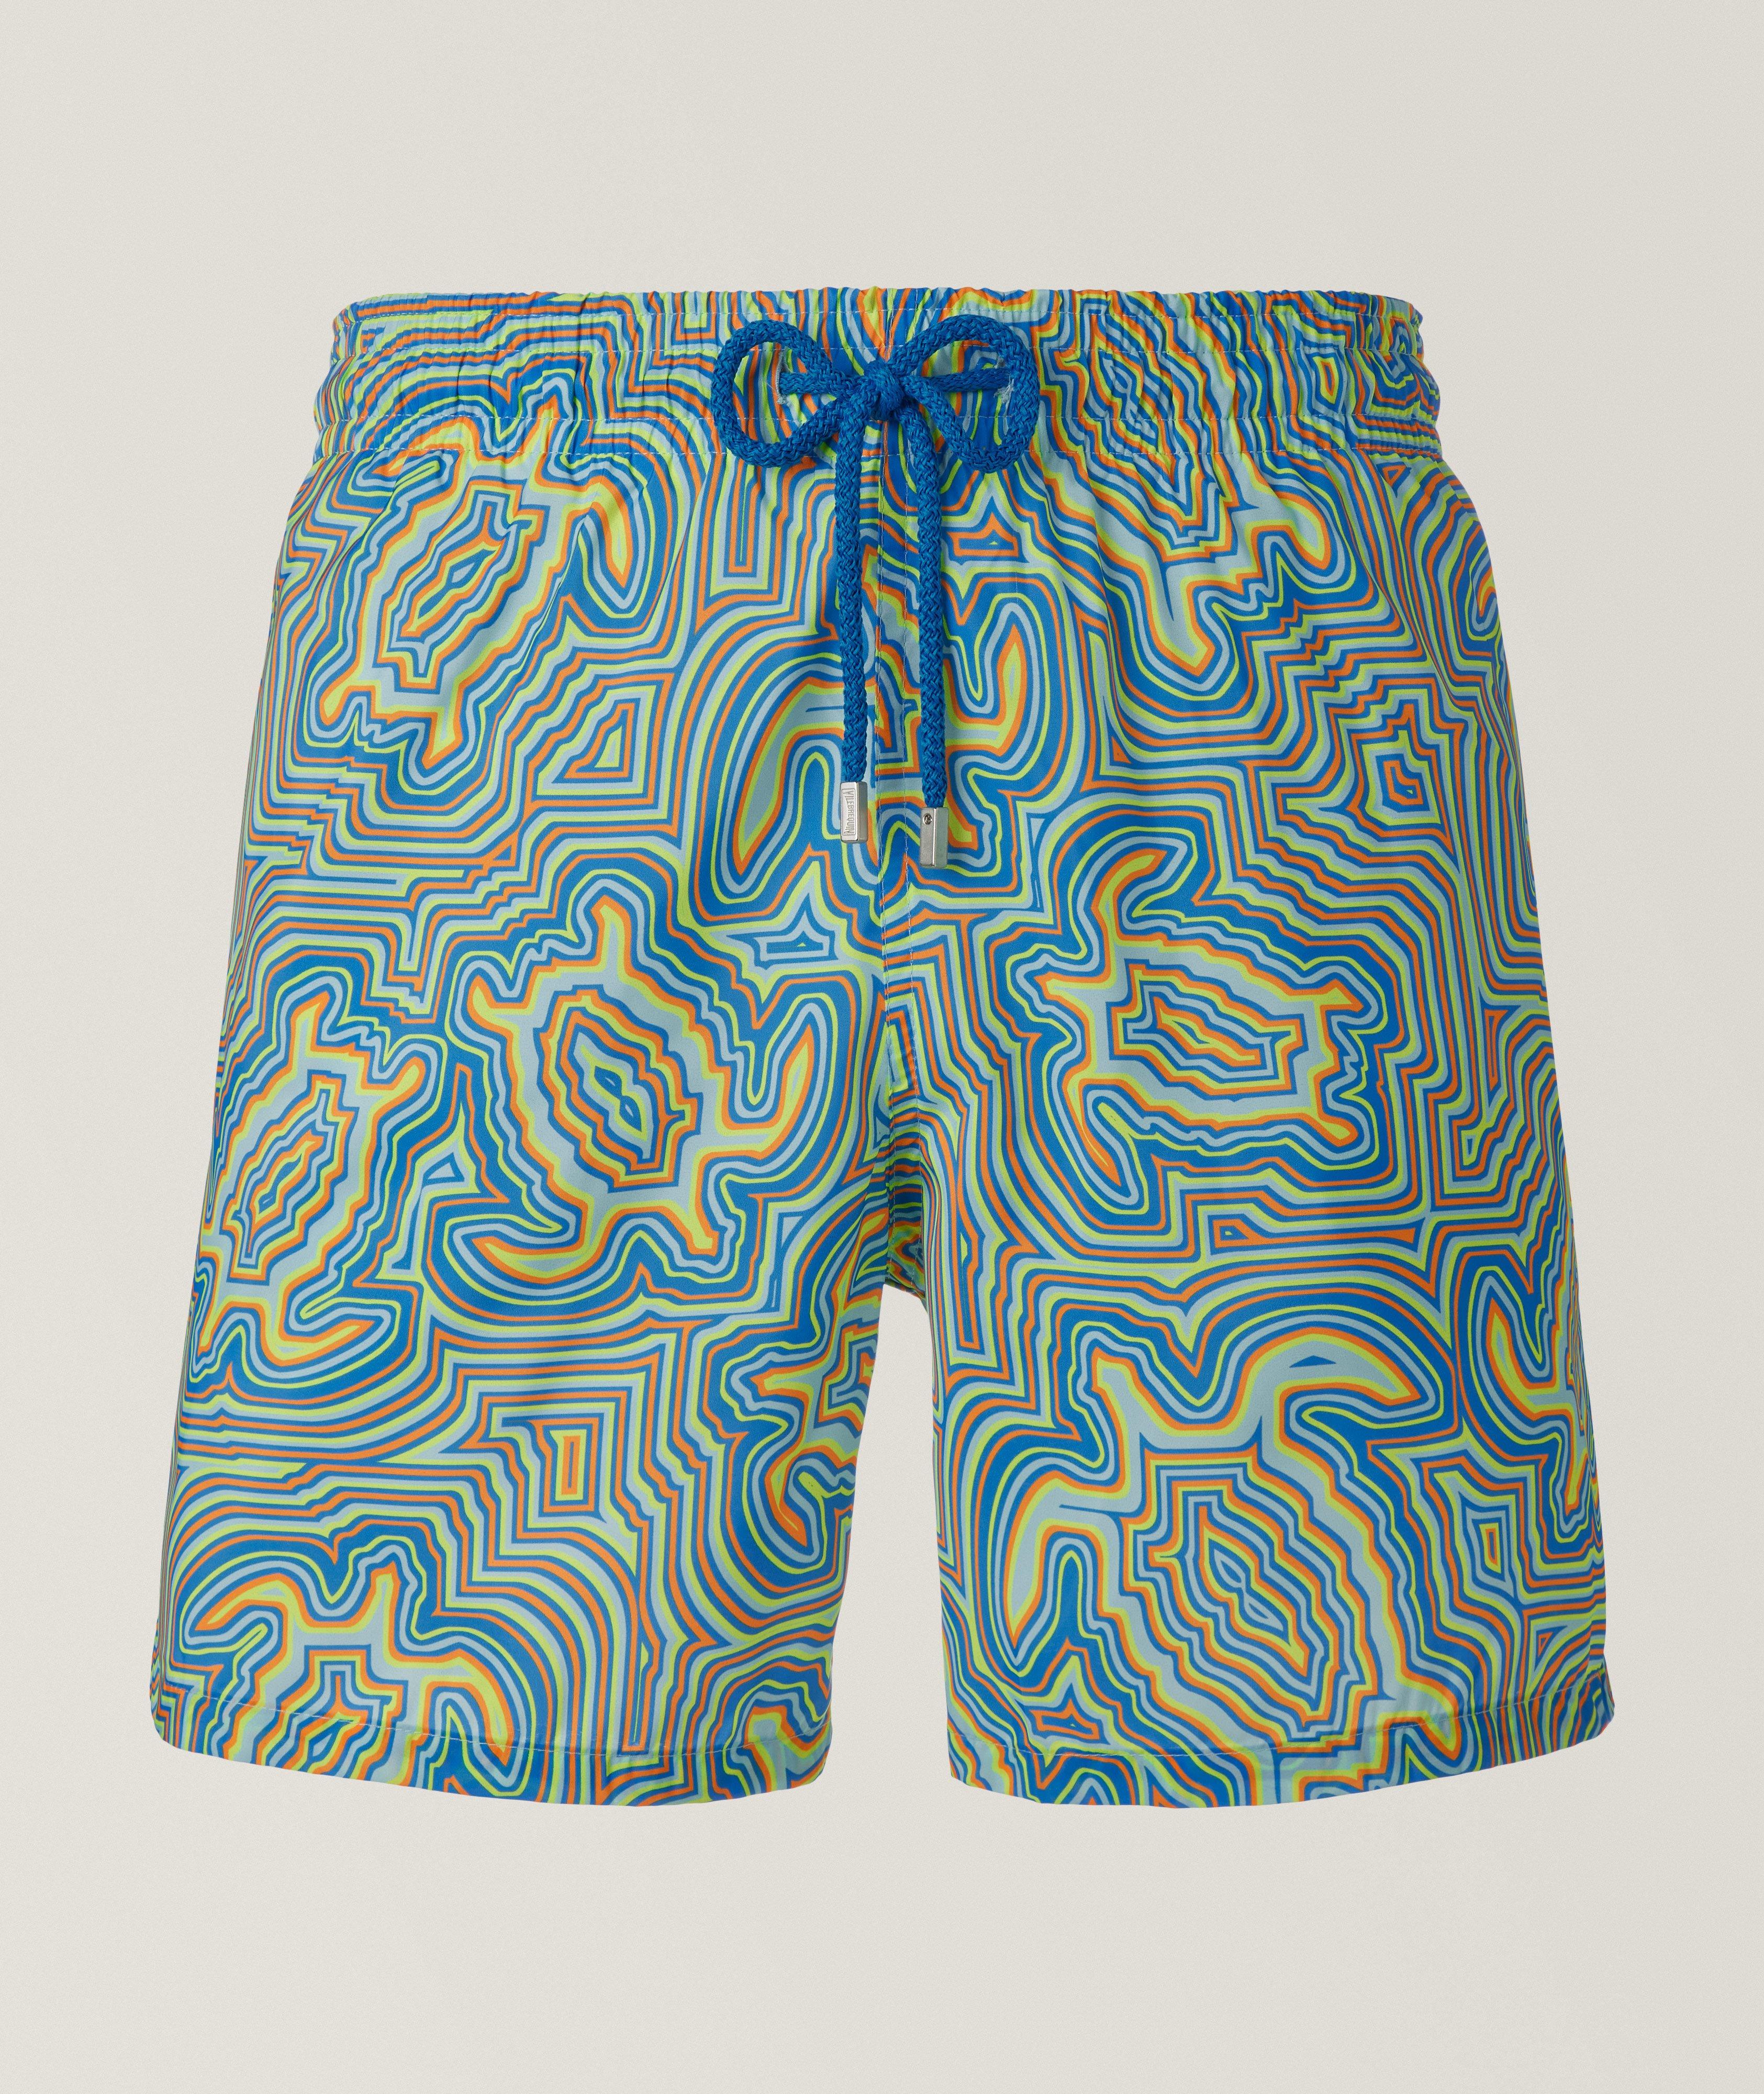 Swim Shorts in Orange Honeycomb Print – Budd London